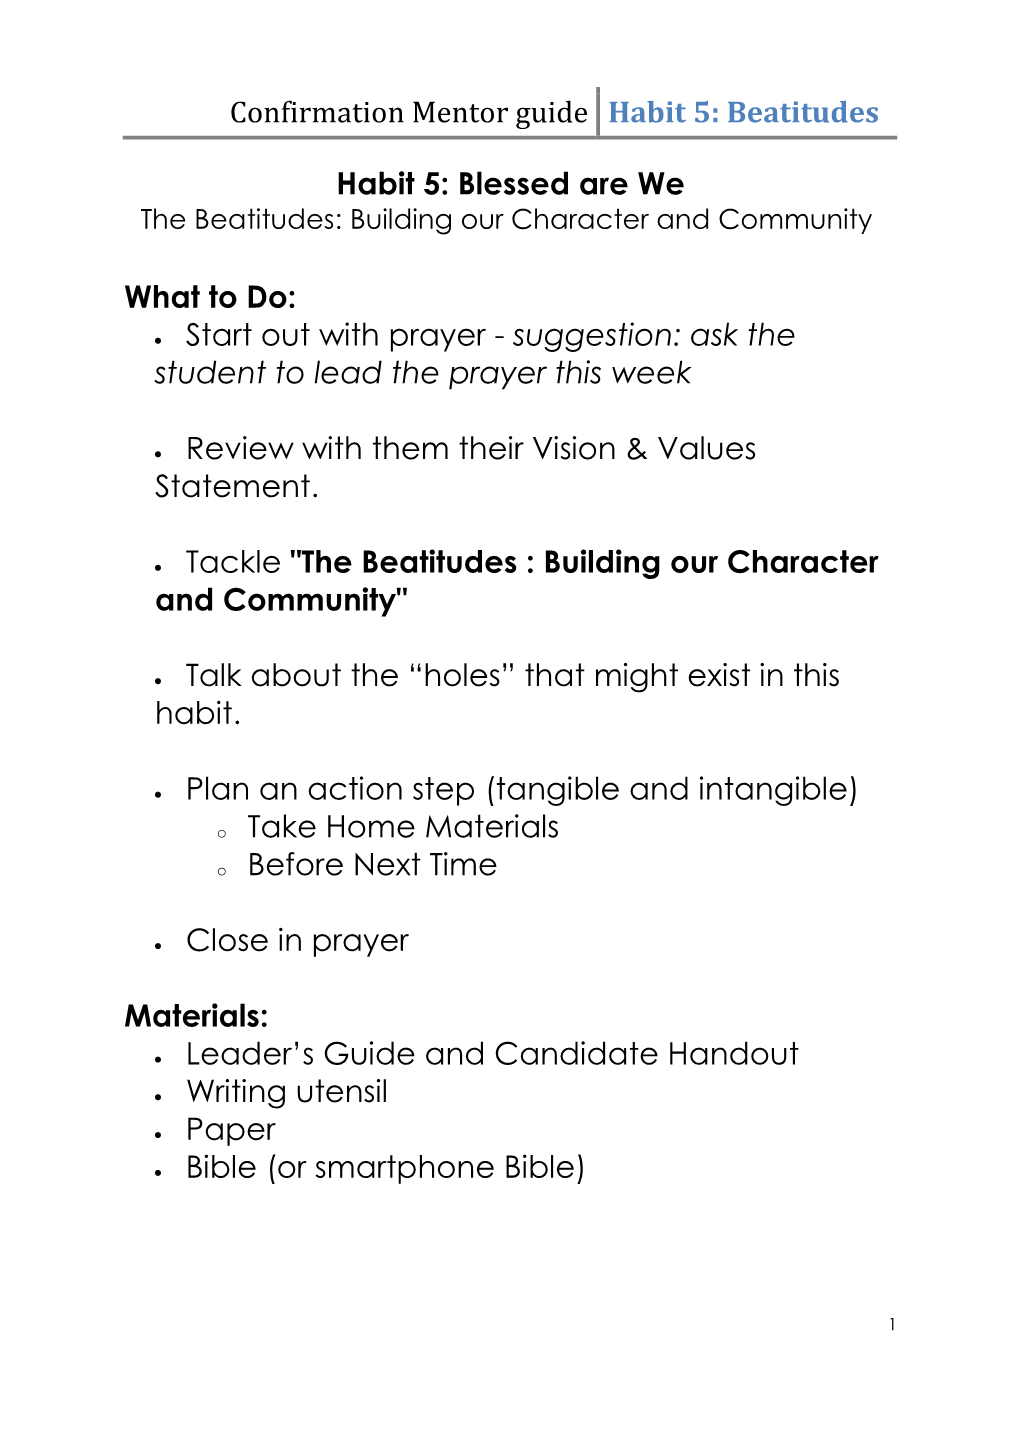 Confirmation Mentor Guide Habit 5: Beatitudes